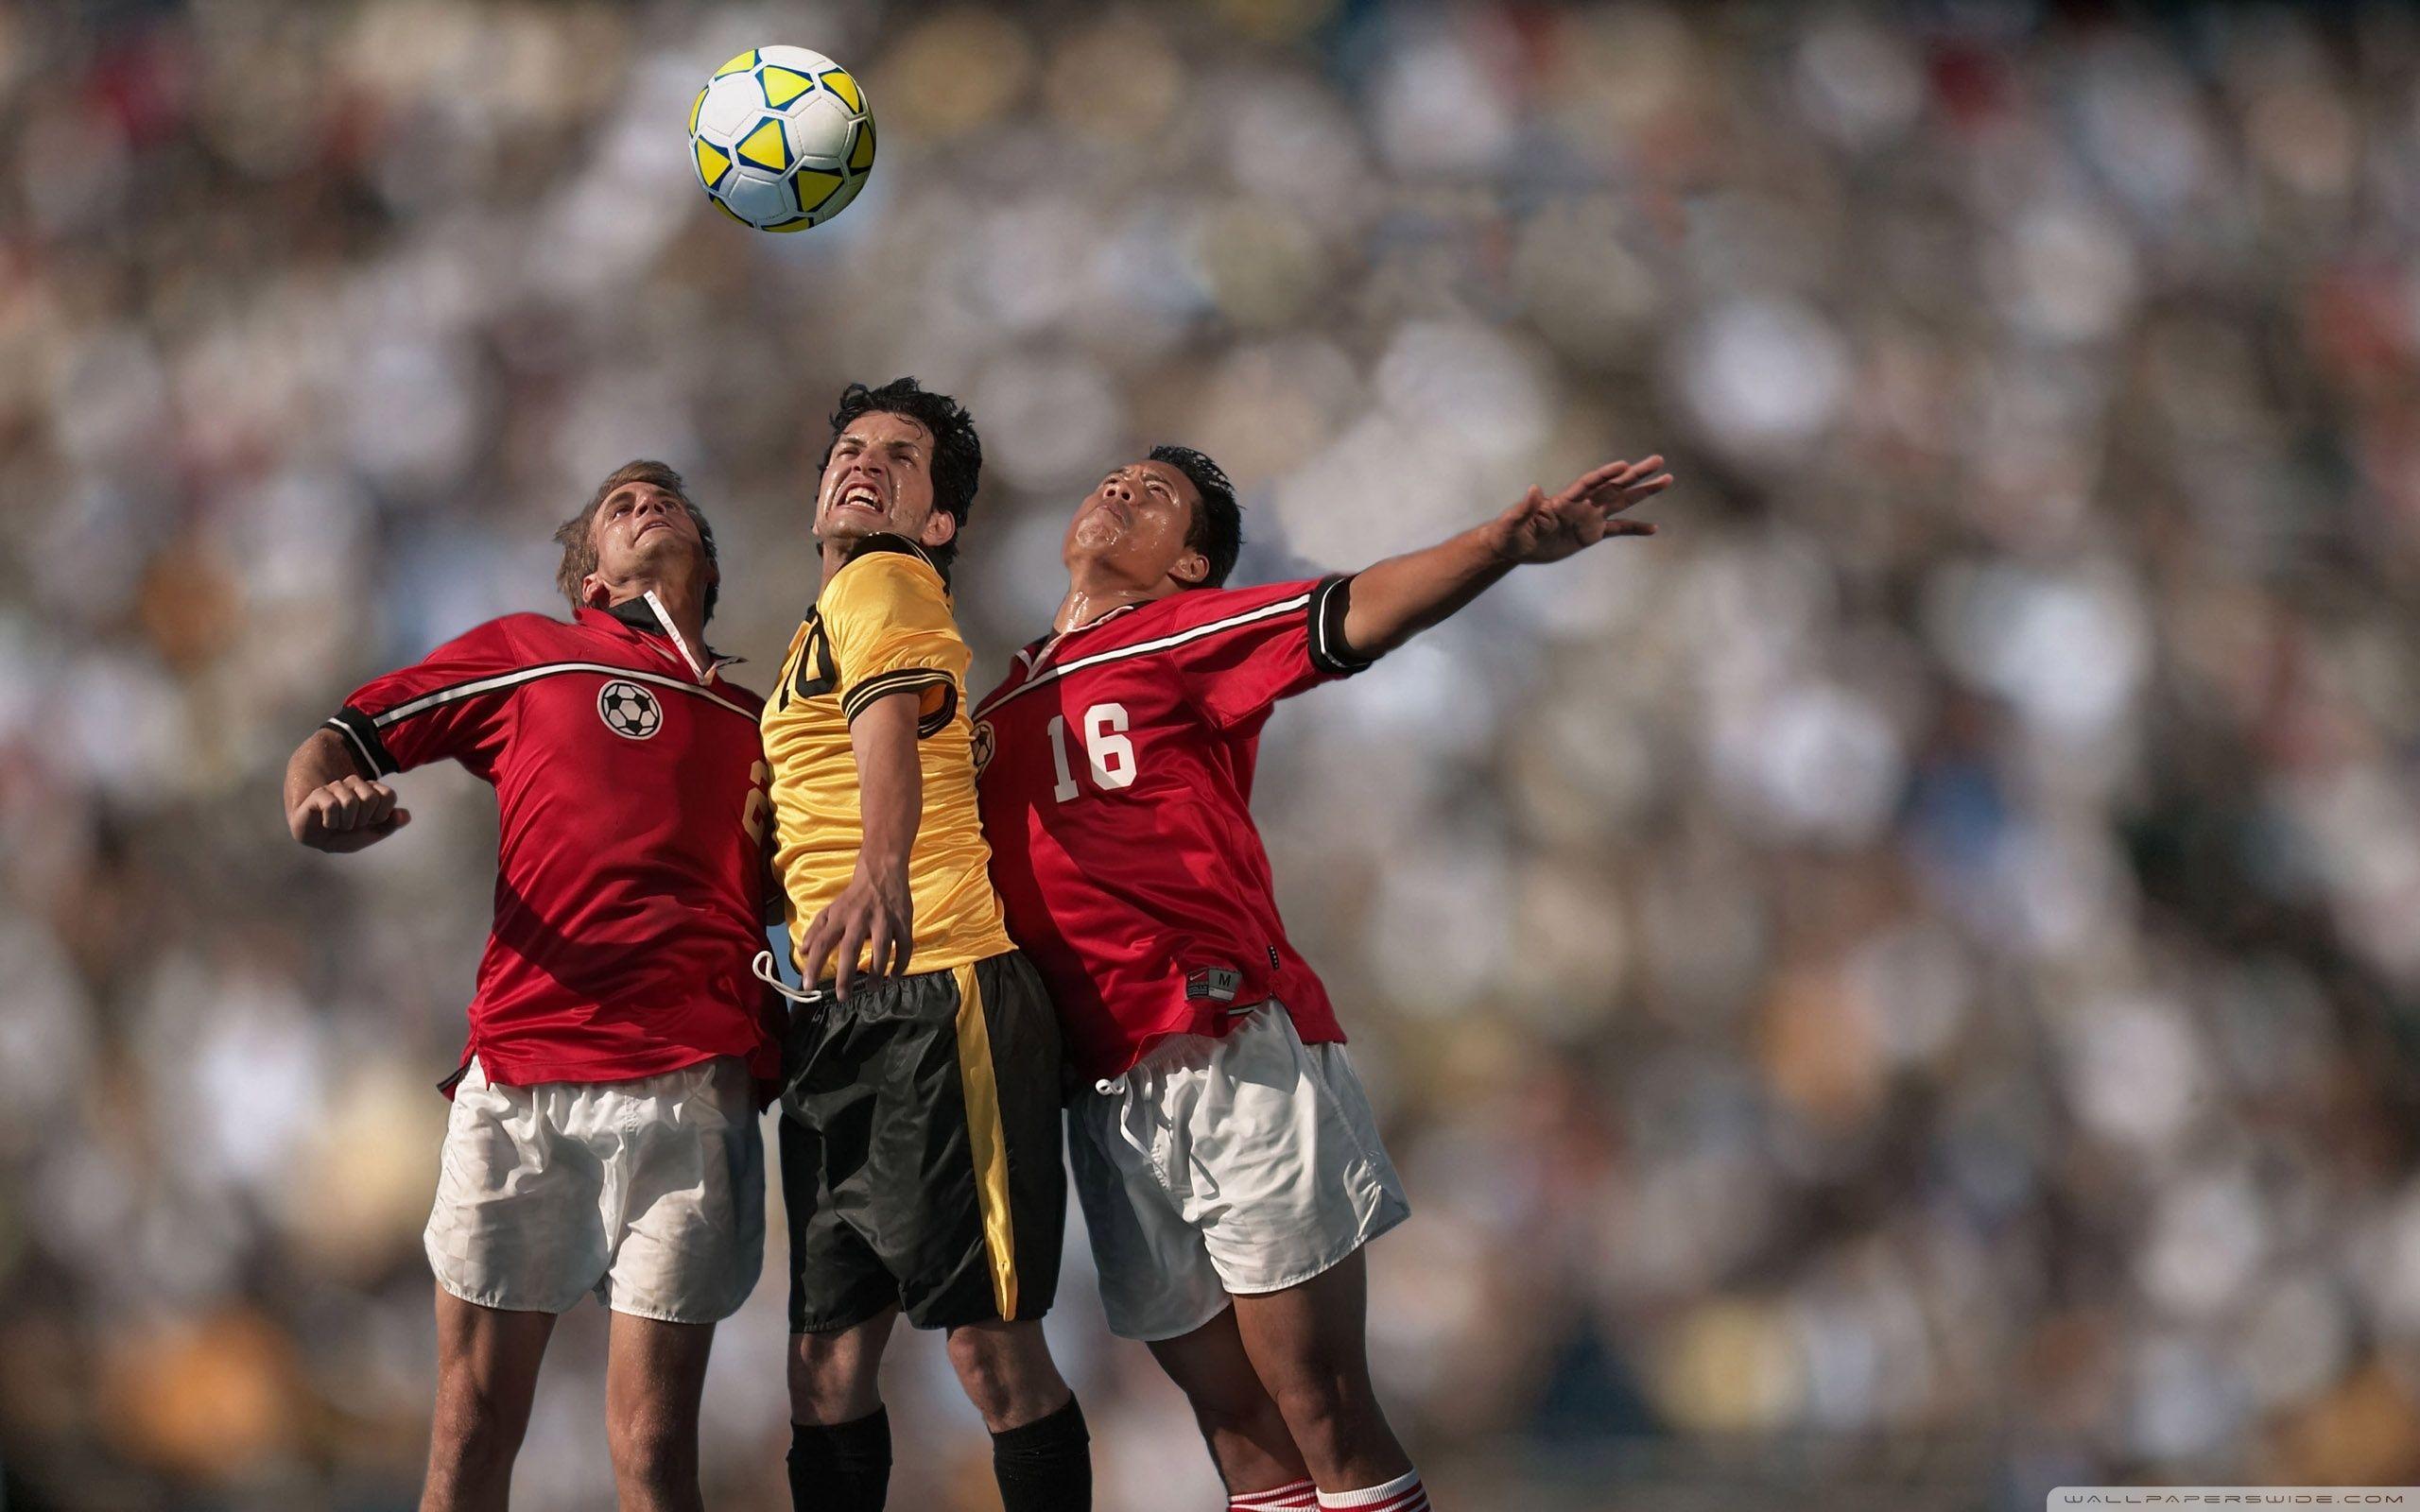 Soccer Players In Action ❤ 4K HD Desktop Wallpaper for 4K Ultra HD